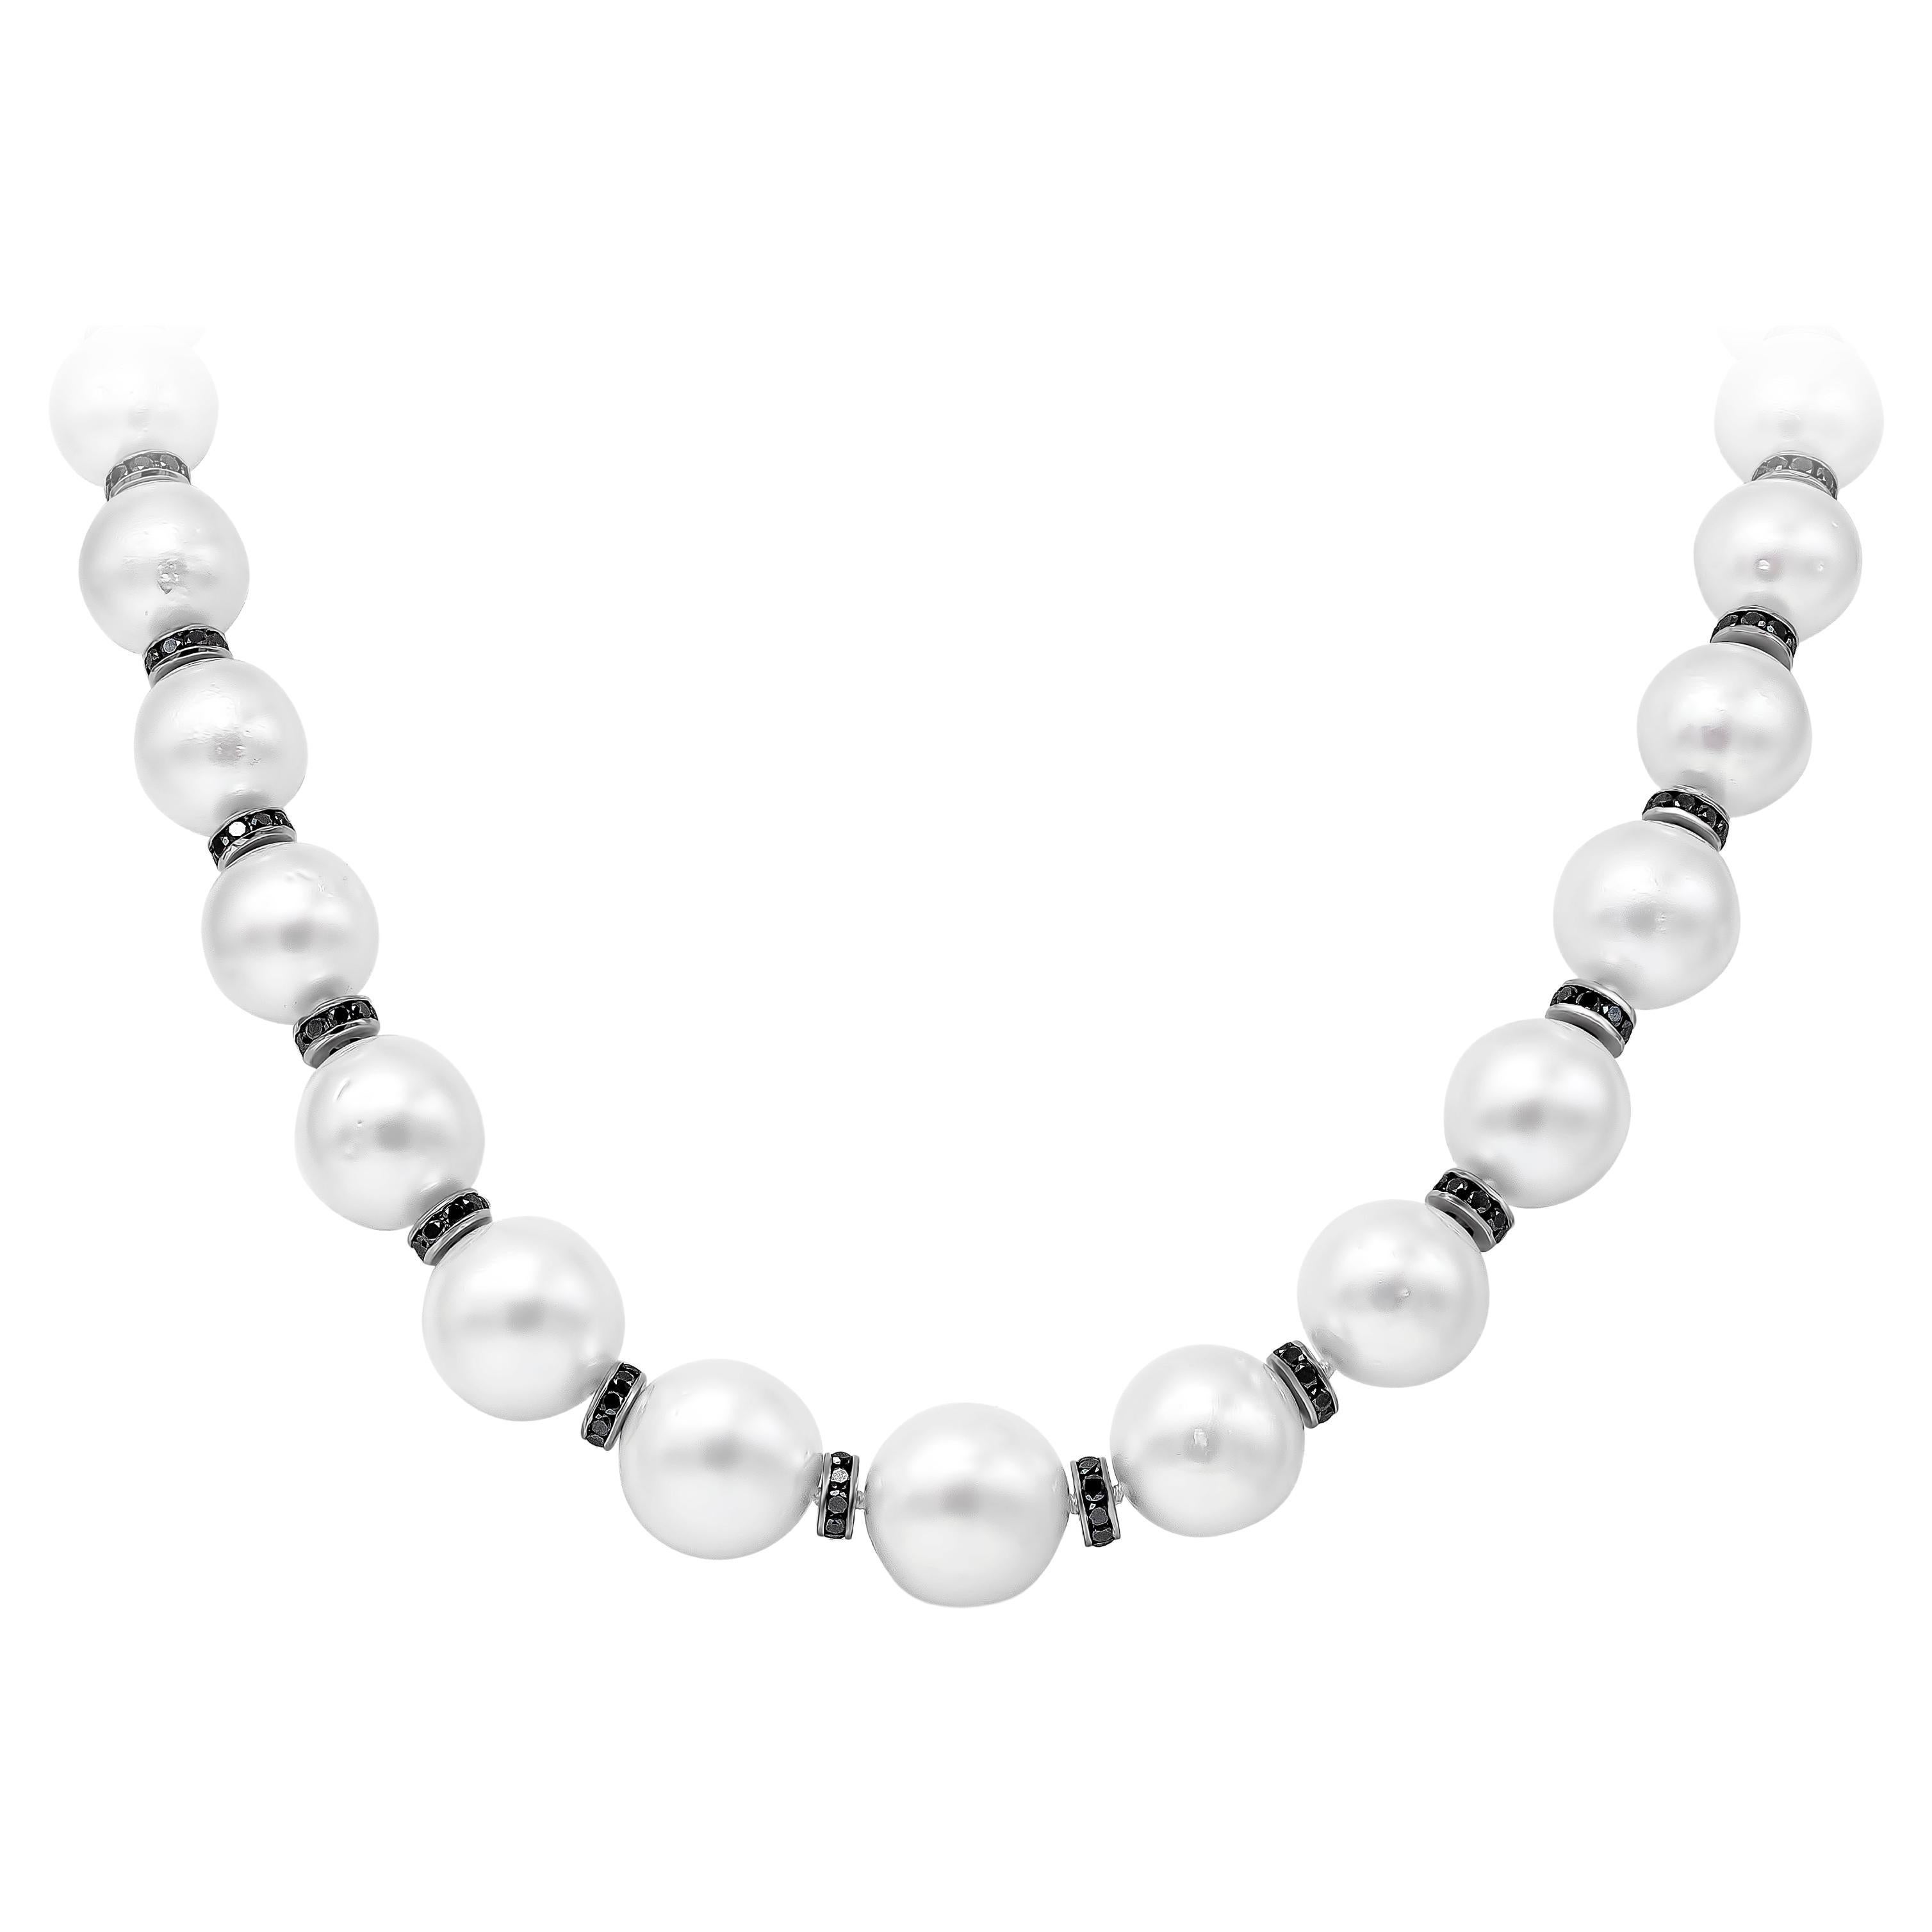 Roman Malakov 11.02 Carats Black Diamonds with Natural White Pearls Necklace